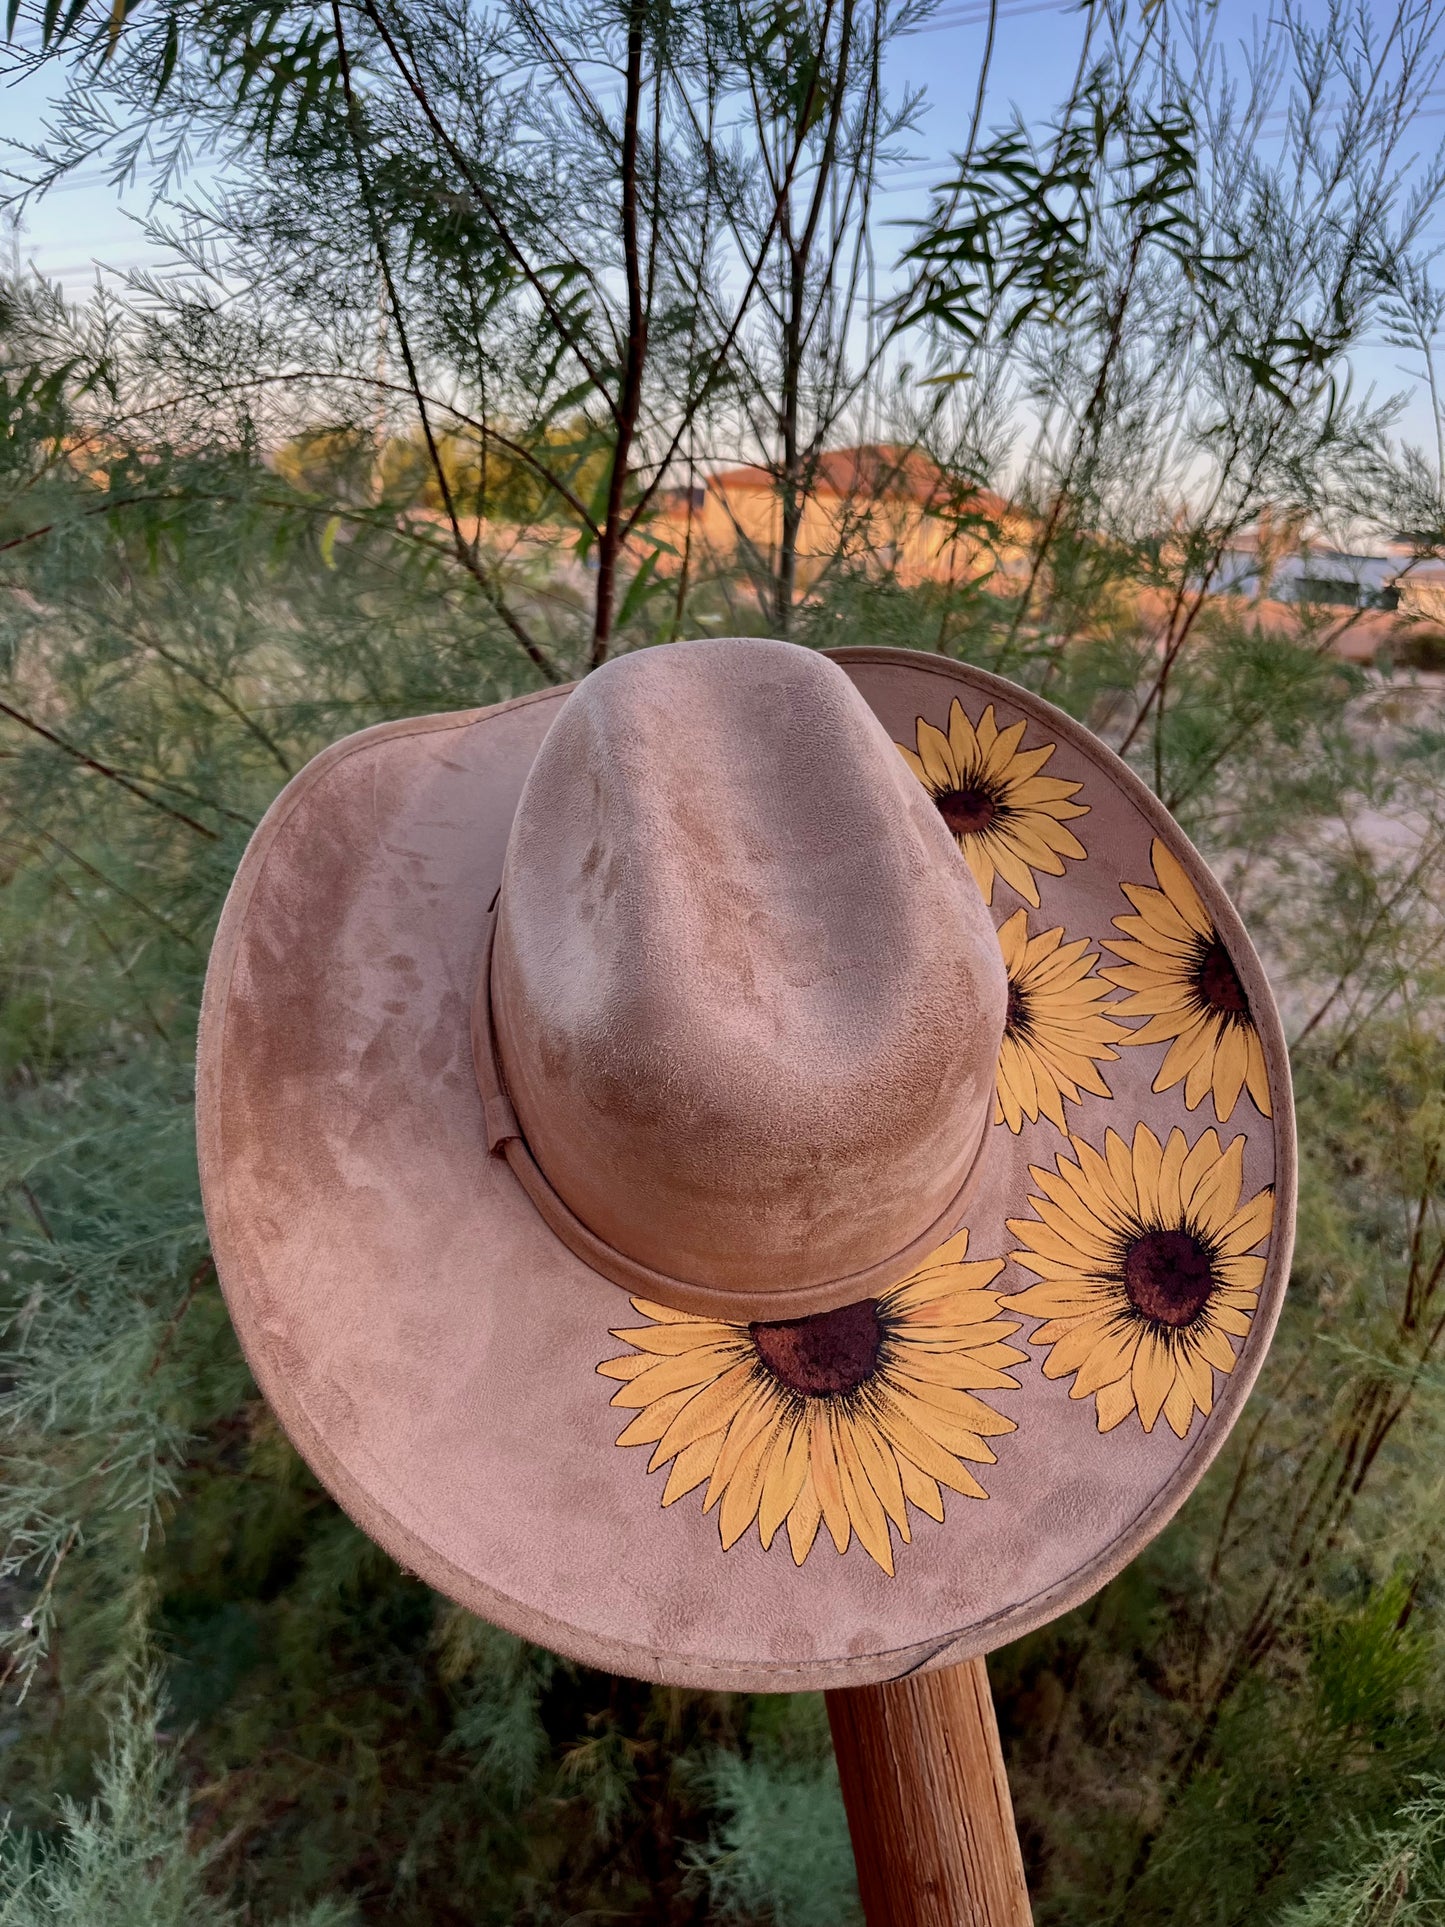 Sunflower floral tan vegan suede wide brim cowboy rancher hat